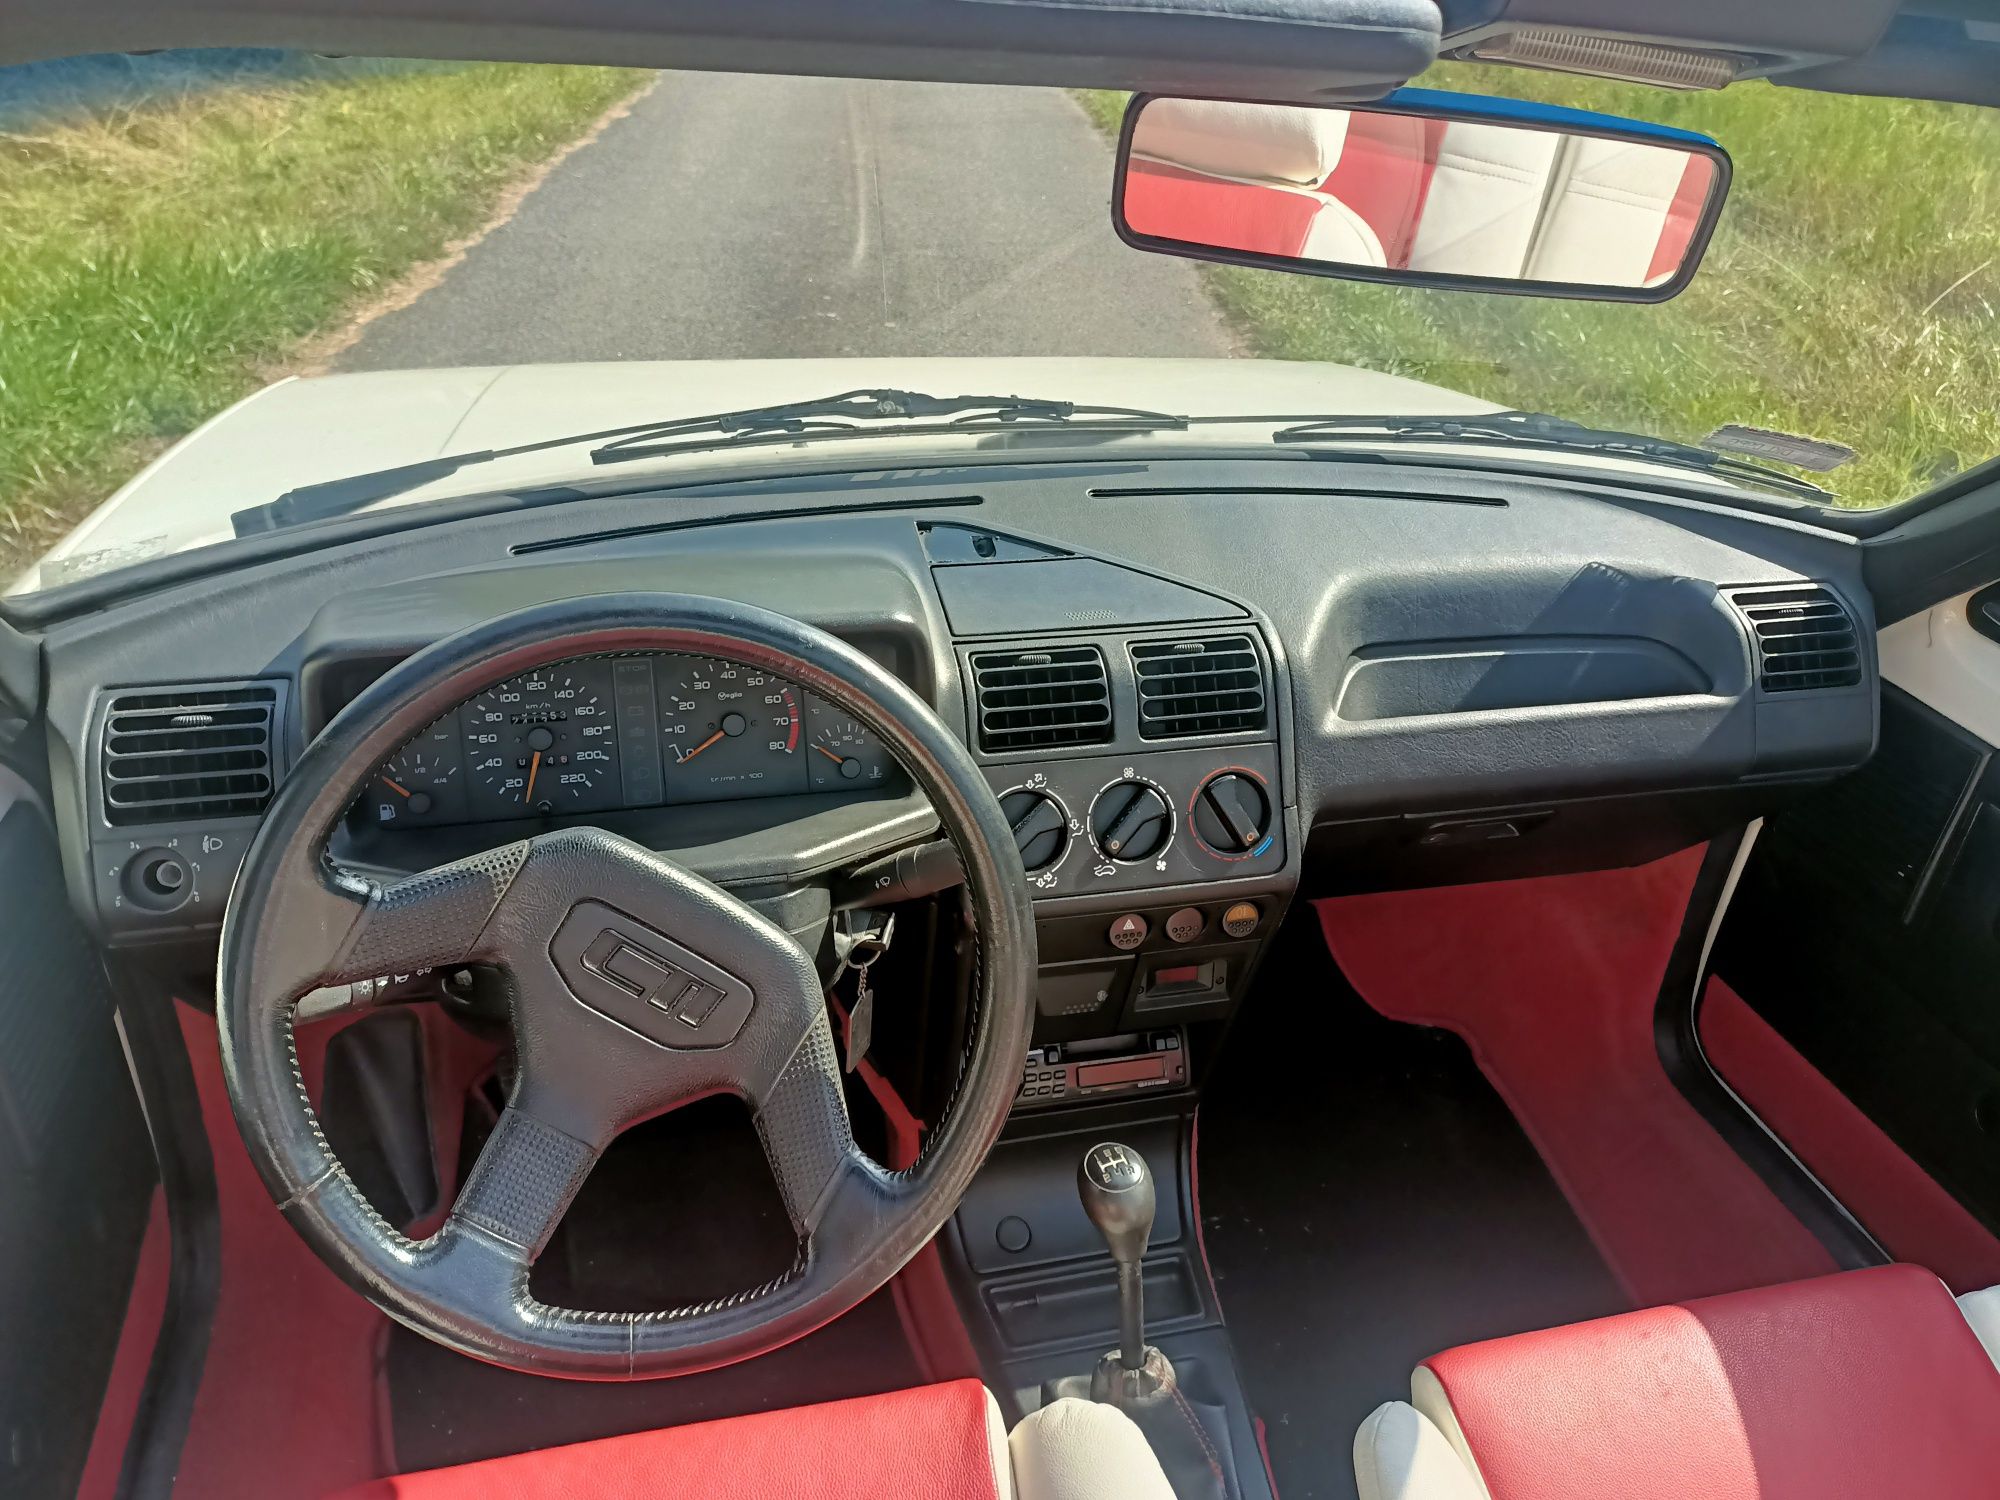 Peugeot 205 CTI 1.9